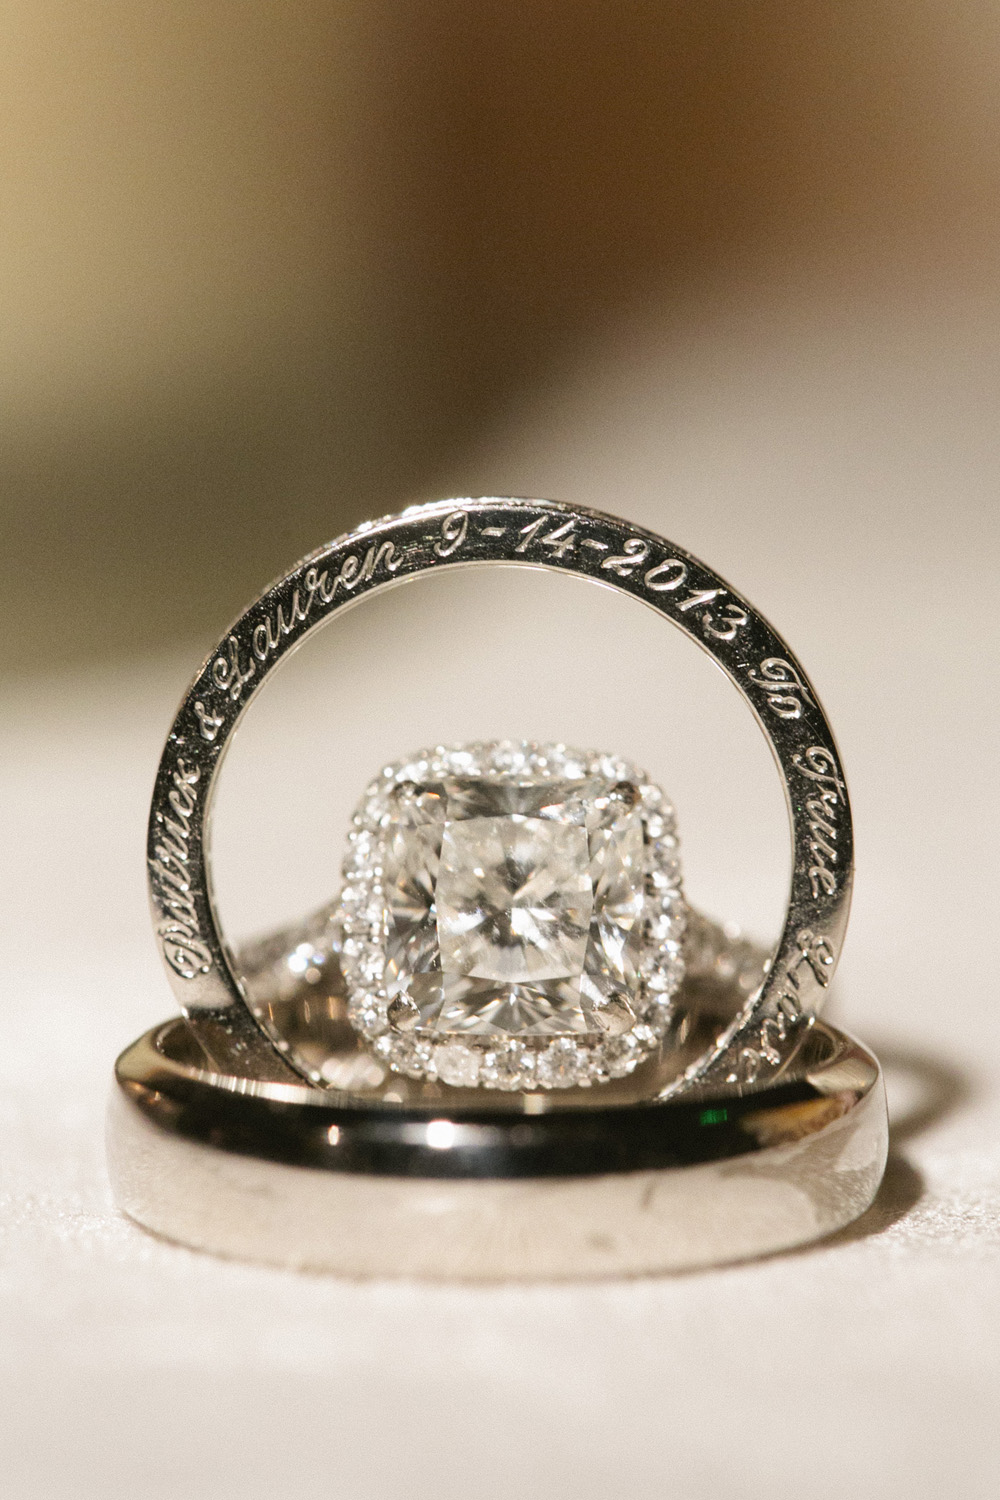 Engraved Wedding Ring - Elizabeth Anne Designs: The Wedding Blog